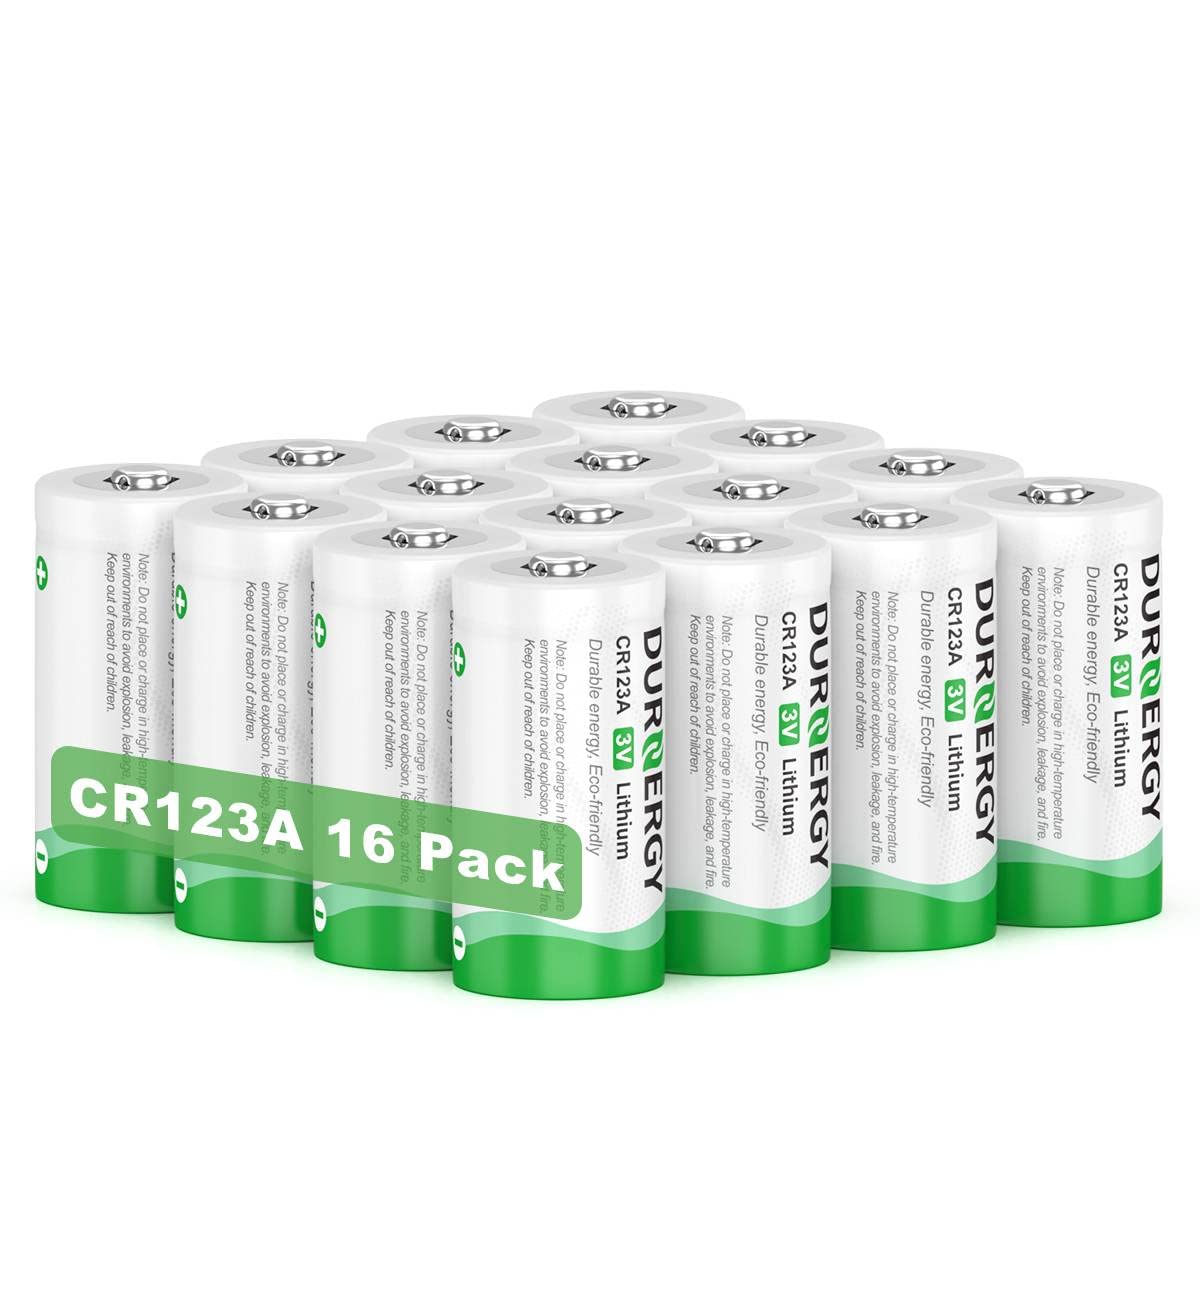 DURNERGY CR123A 3V Lithium Battery 1500mAh 16 Pack, 123 Batteries Lithium, 123A Lithium Batteries 3 Volt High Power, CR123 Battery